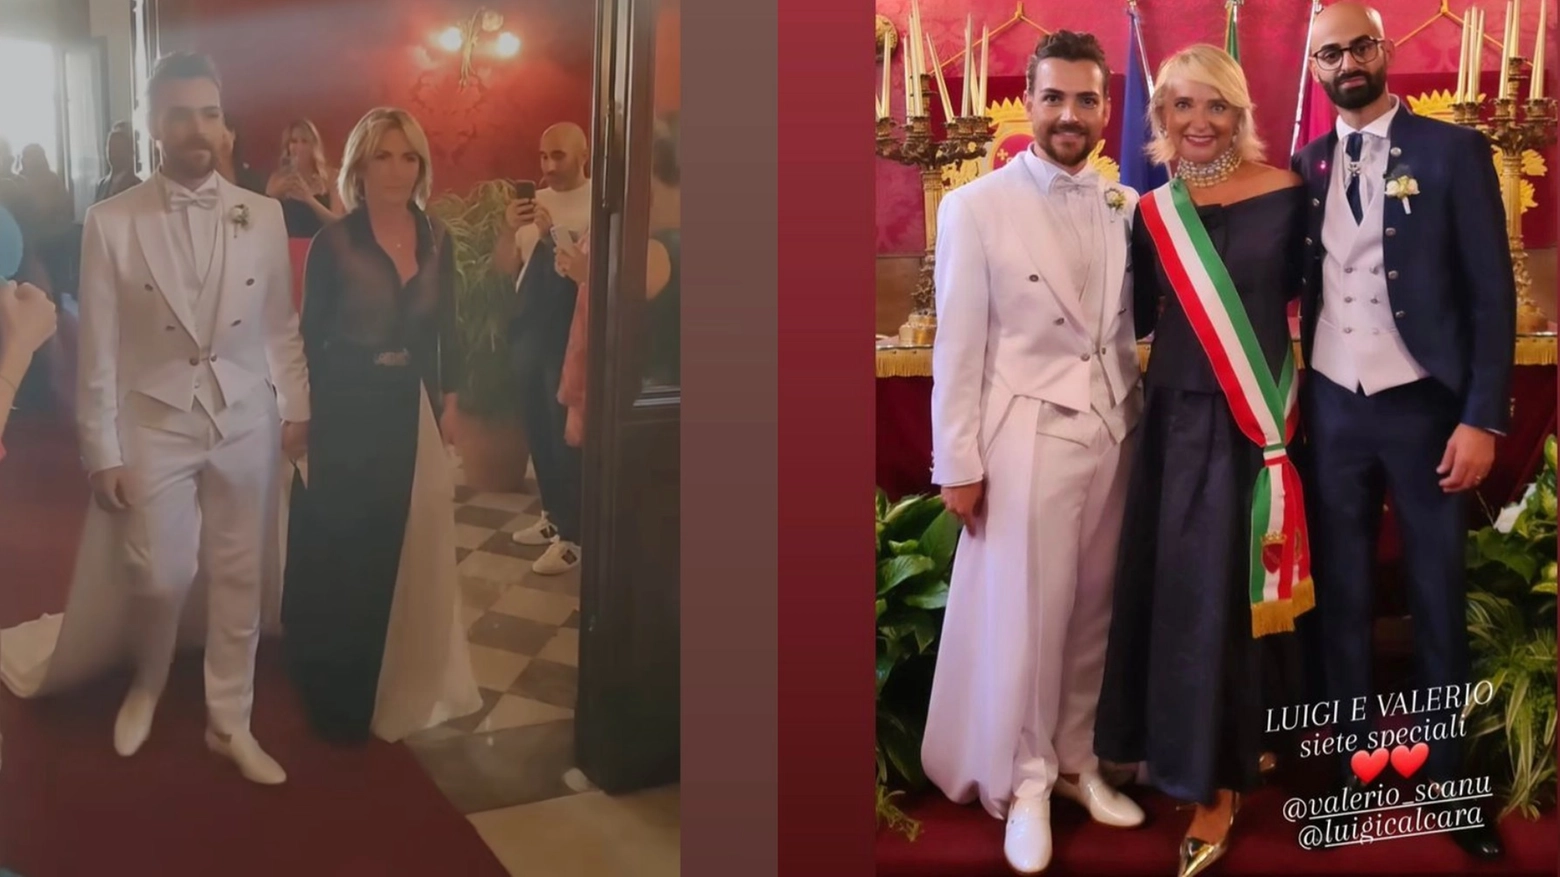 Il matrimonio di Valerio Scanu e Luigi Calcara